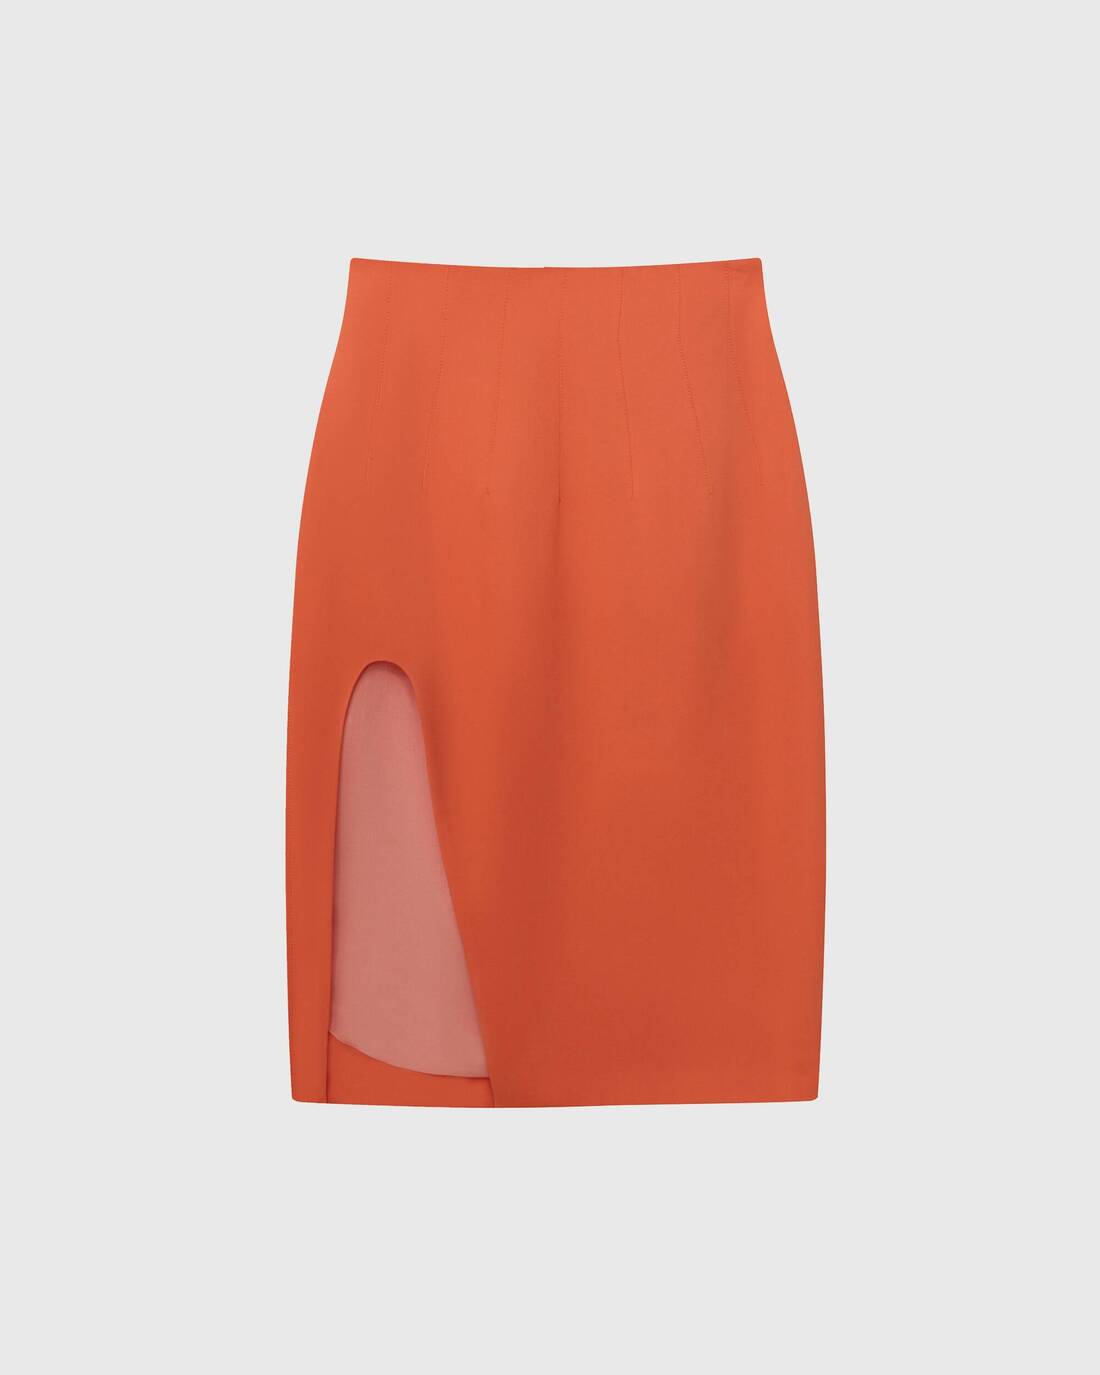 Cut-out skirt